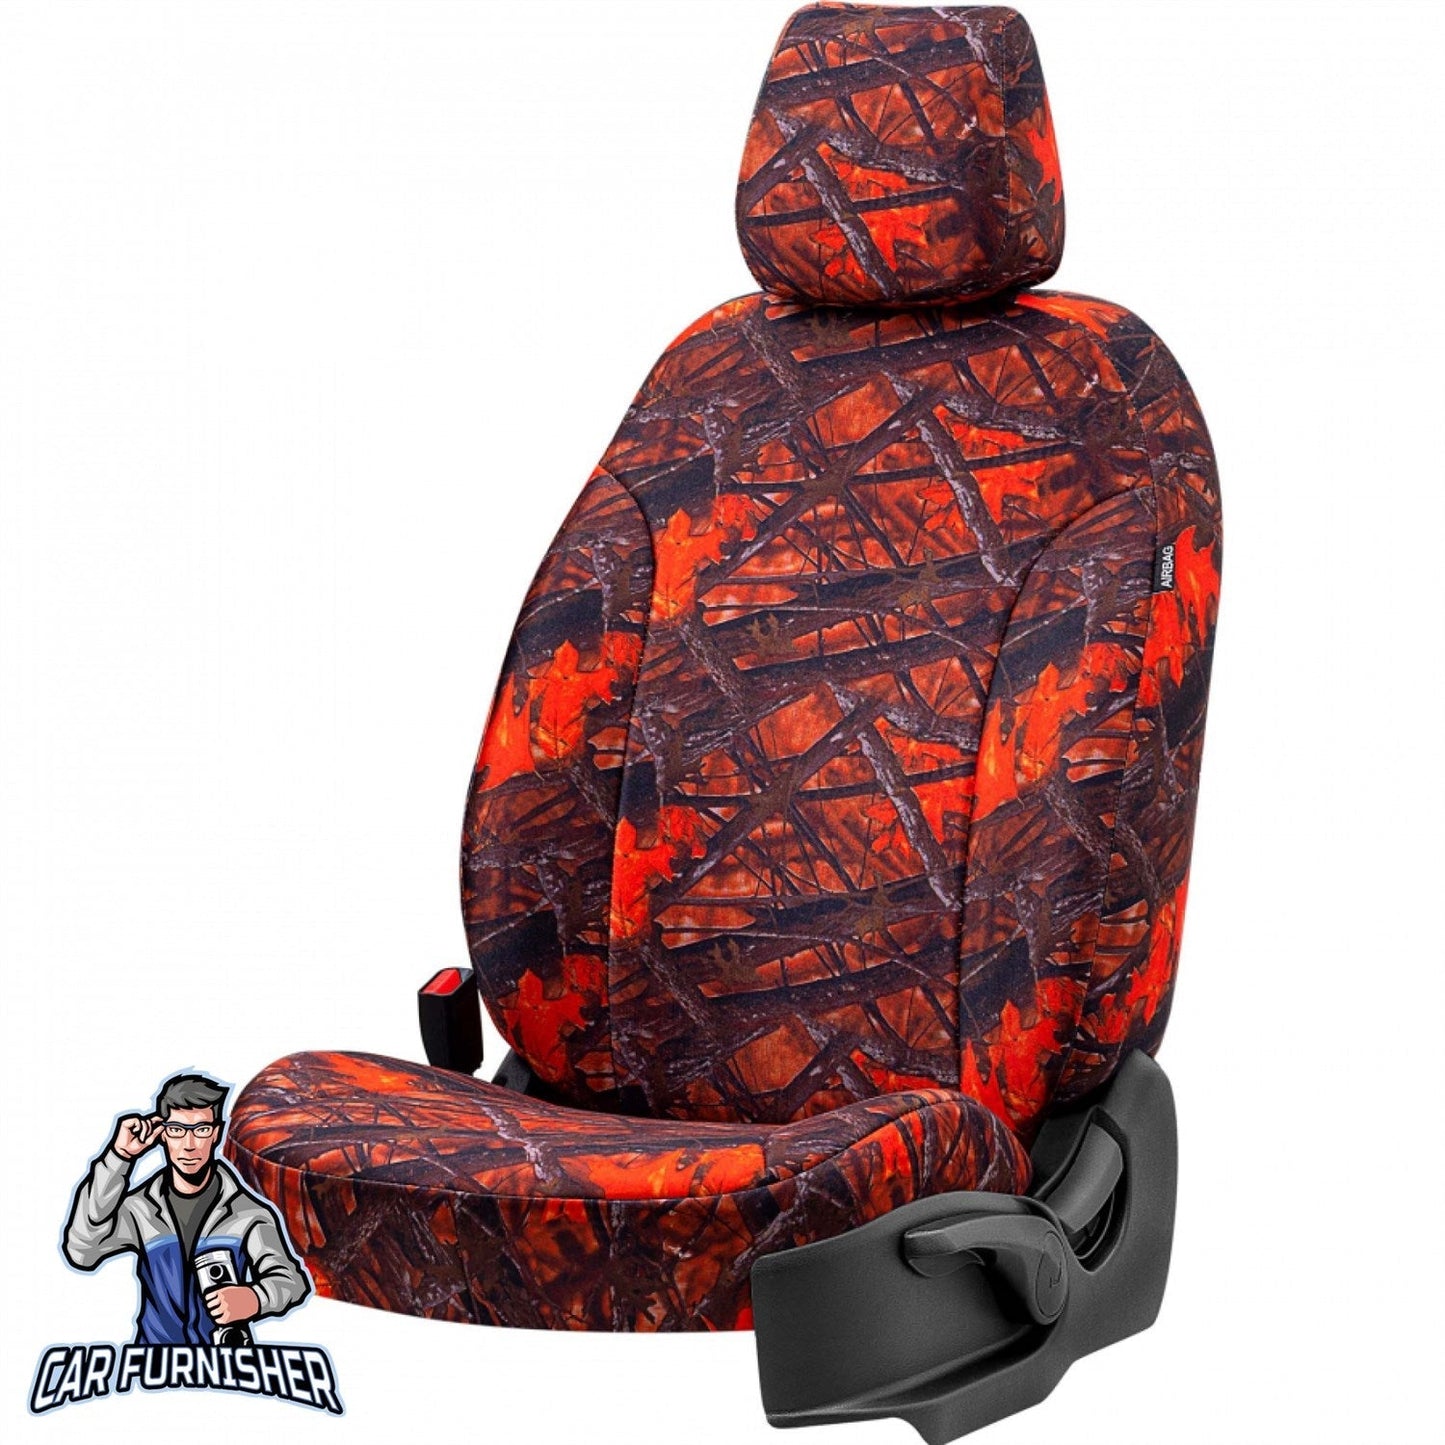 Ssangyong Korando Seat Covers Camouflage Waterproof Design Sahara Camo Waterproof Fabric